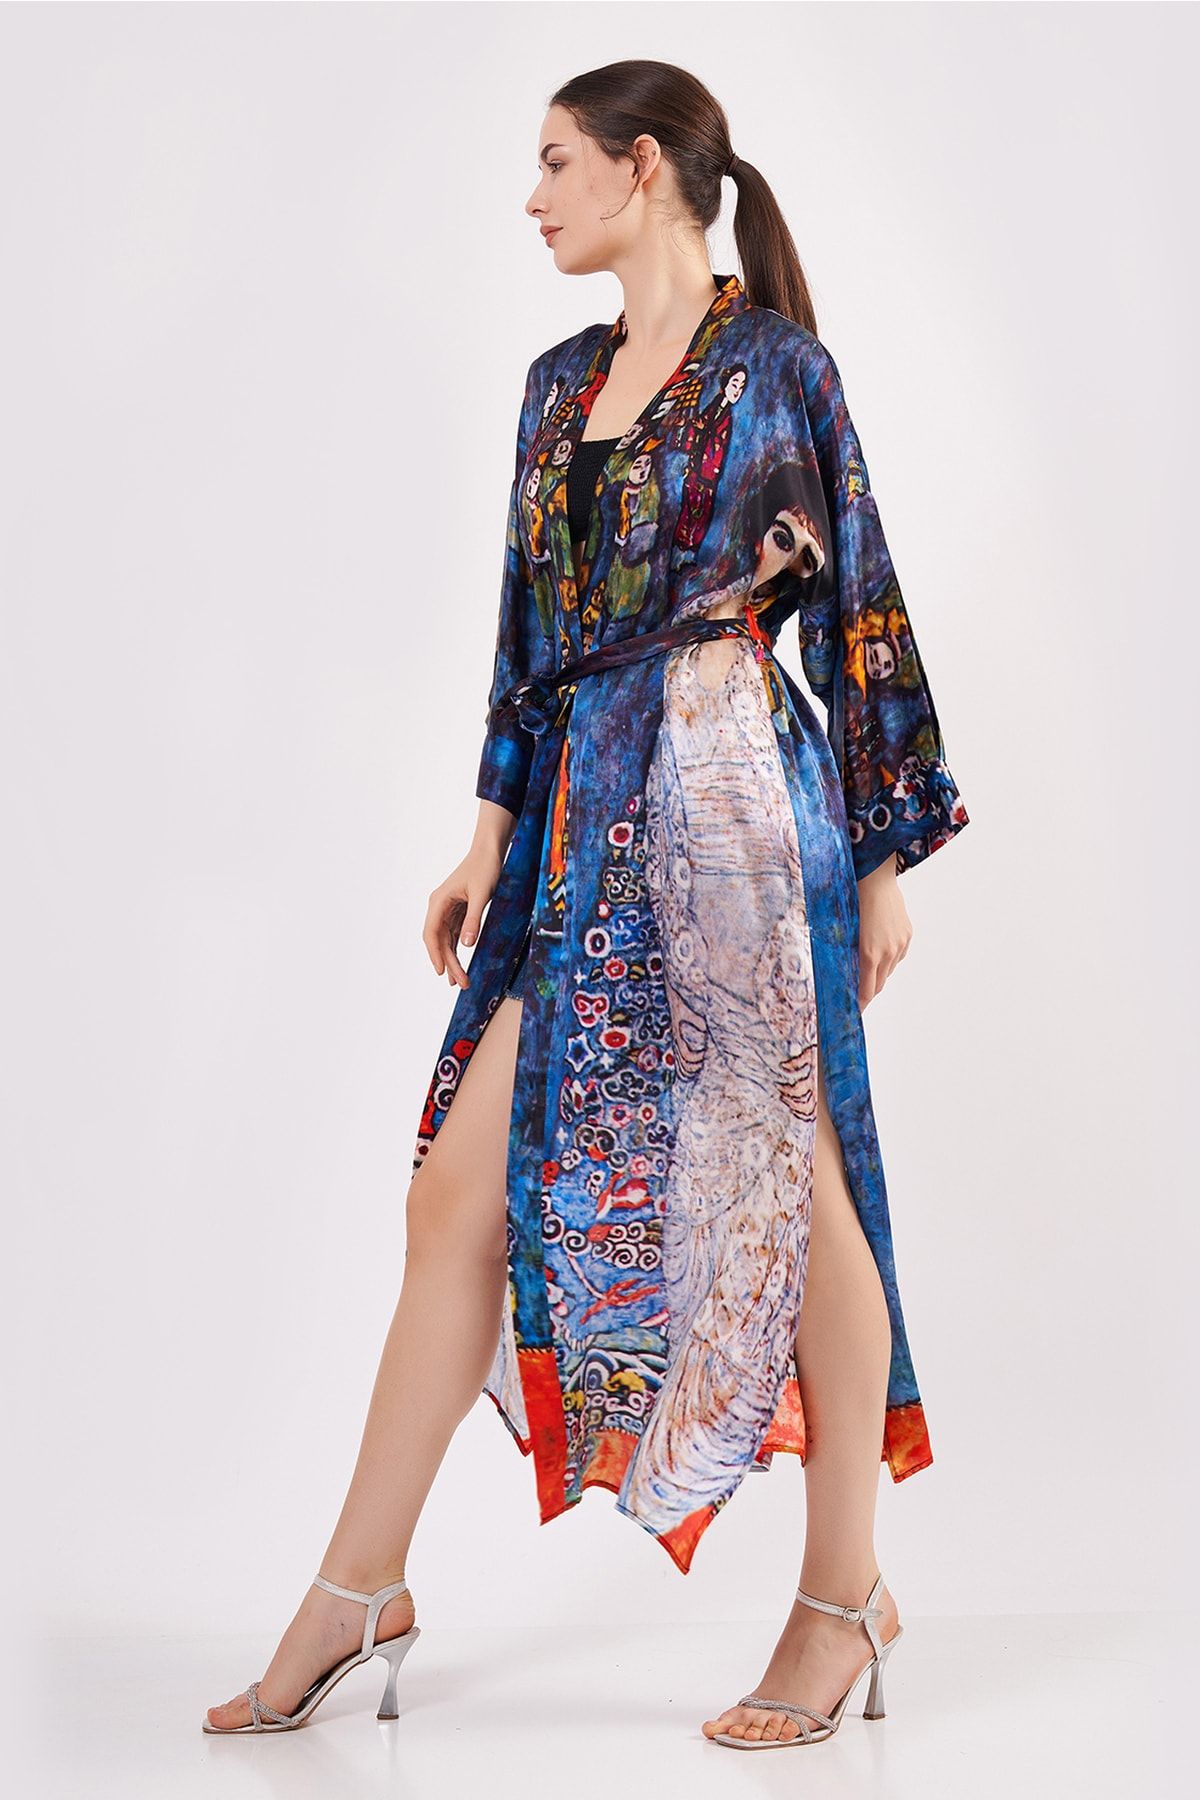 Nomads Felt İpek Uzun Kimono Kaftan | Gustav Klimt Barones Elizabeth | Nomads Felt